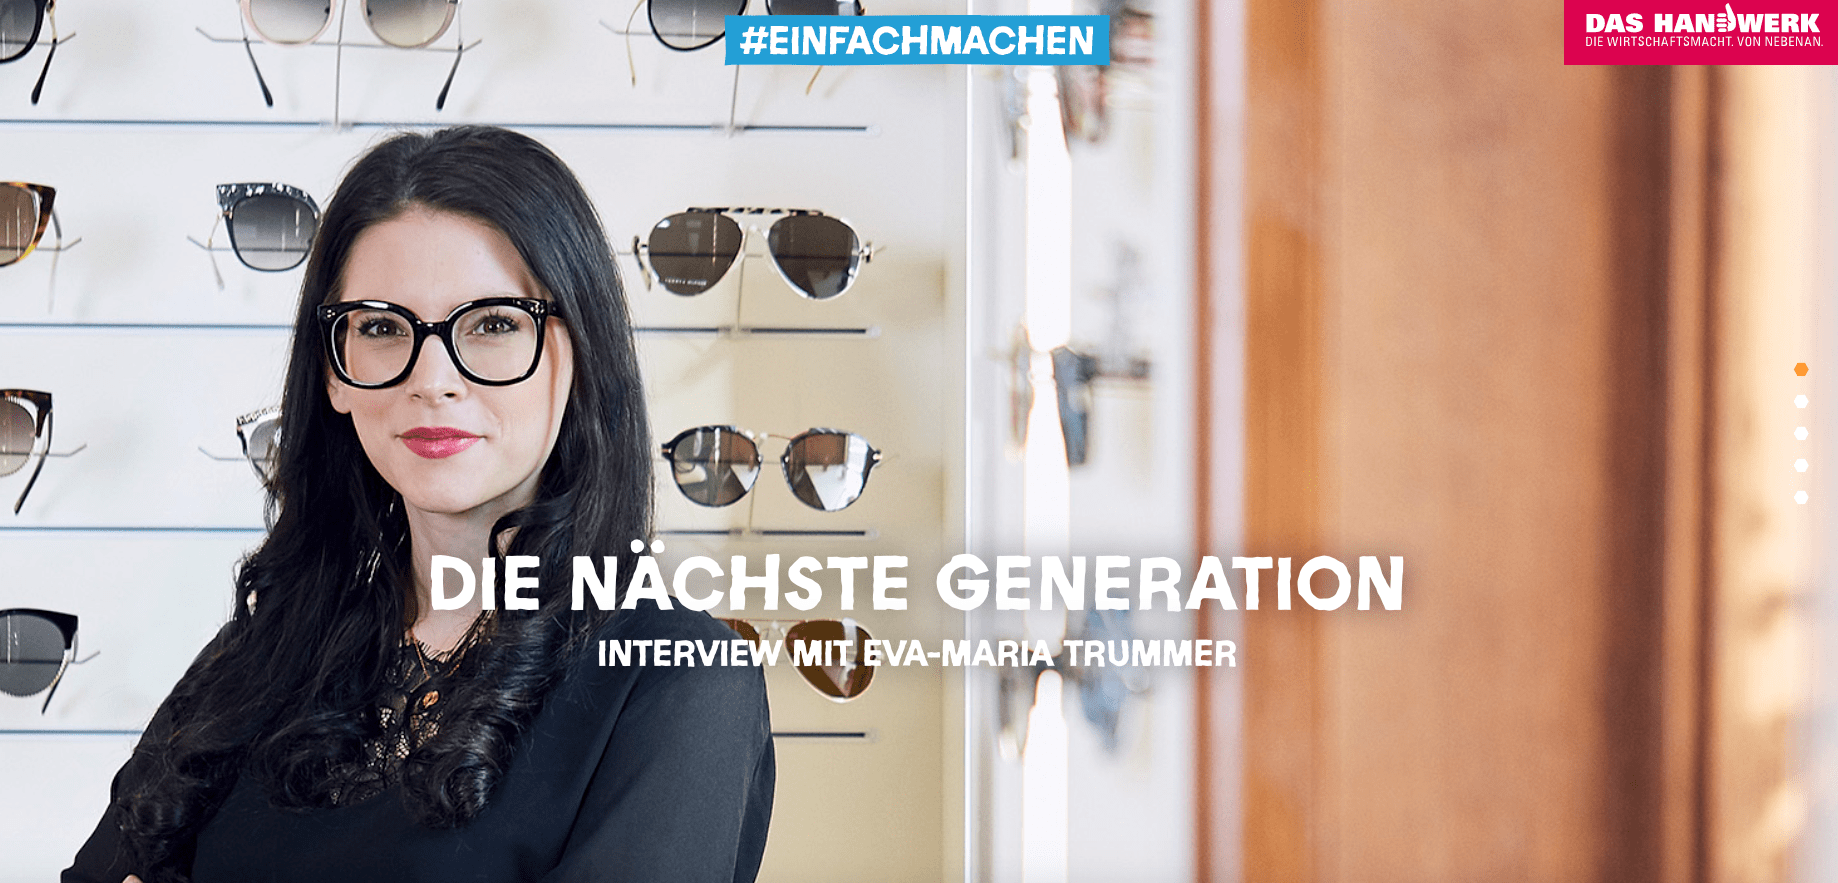 Eva-Marie Trummer Augenoptikermeisterin - Das Handwerk